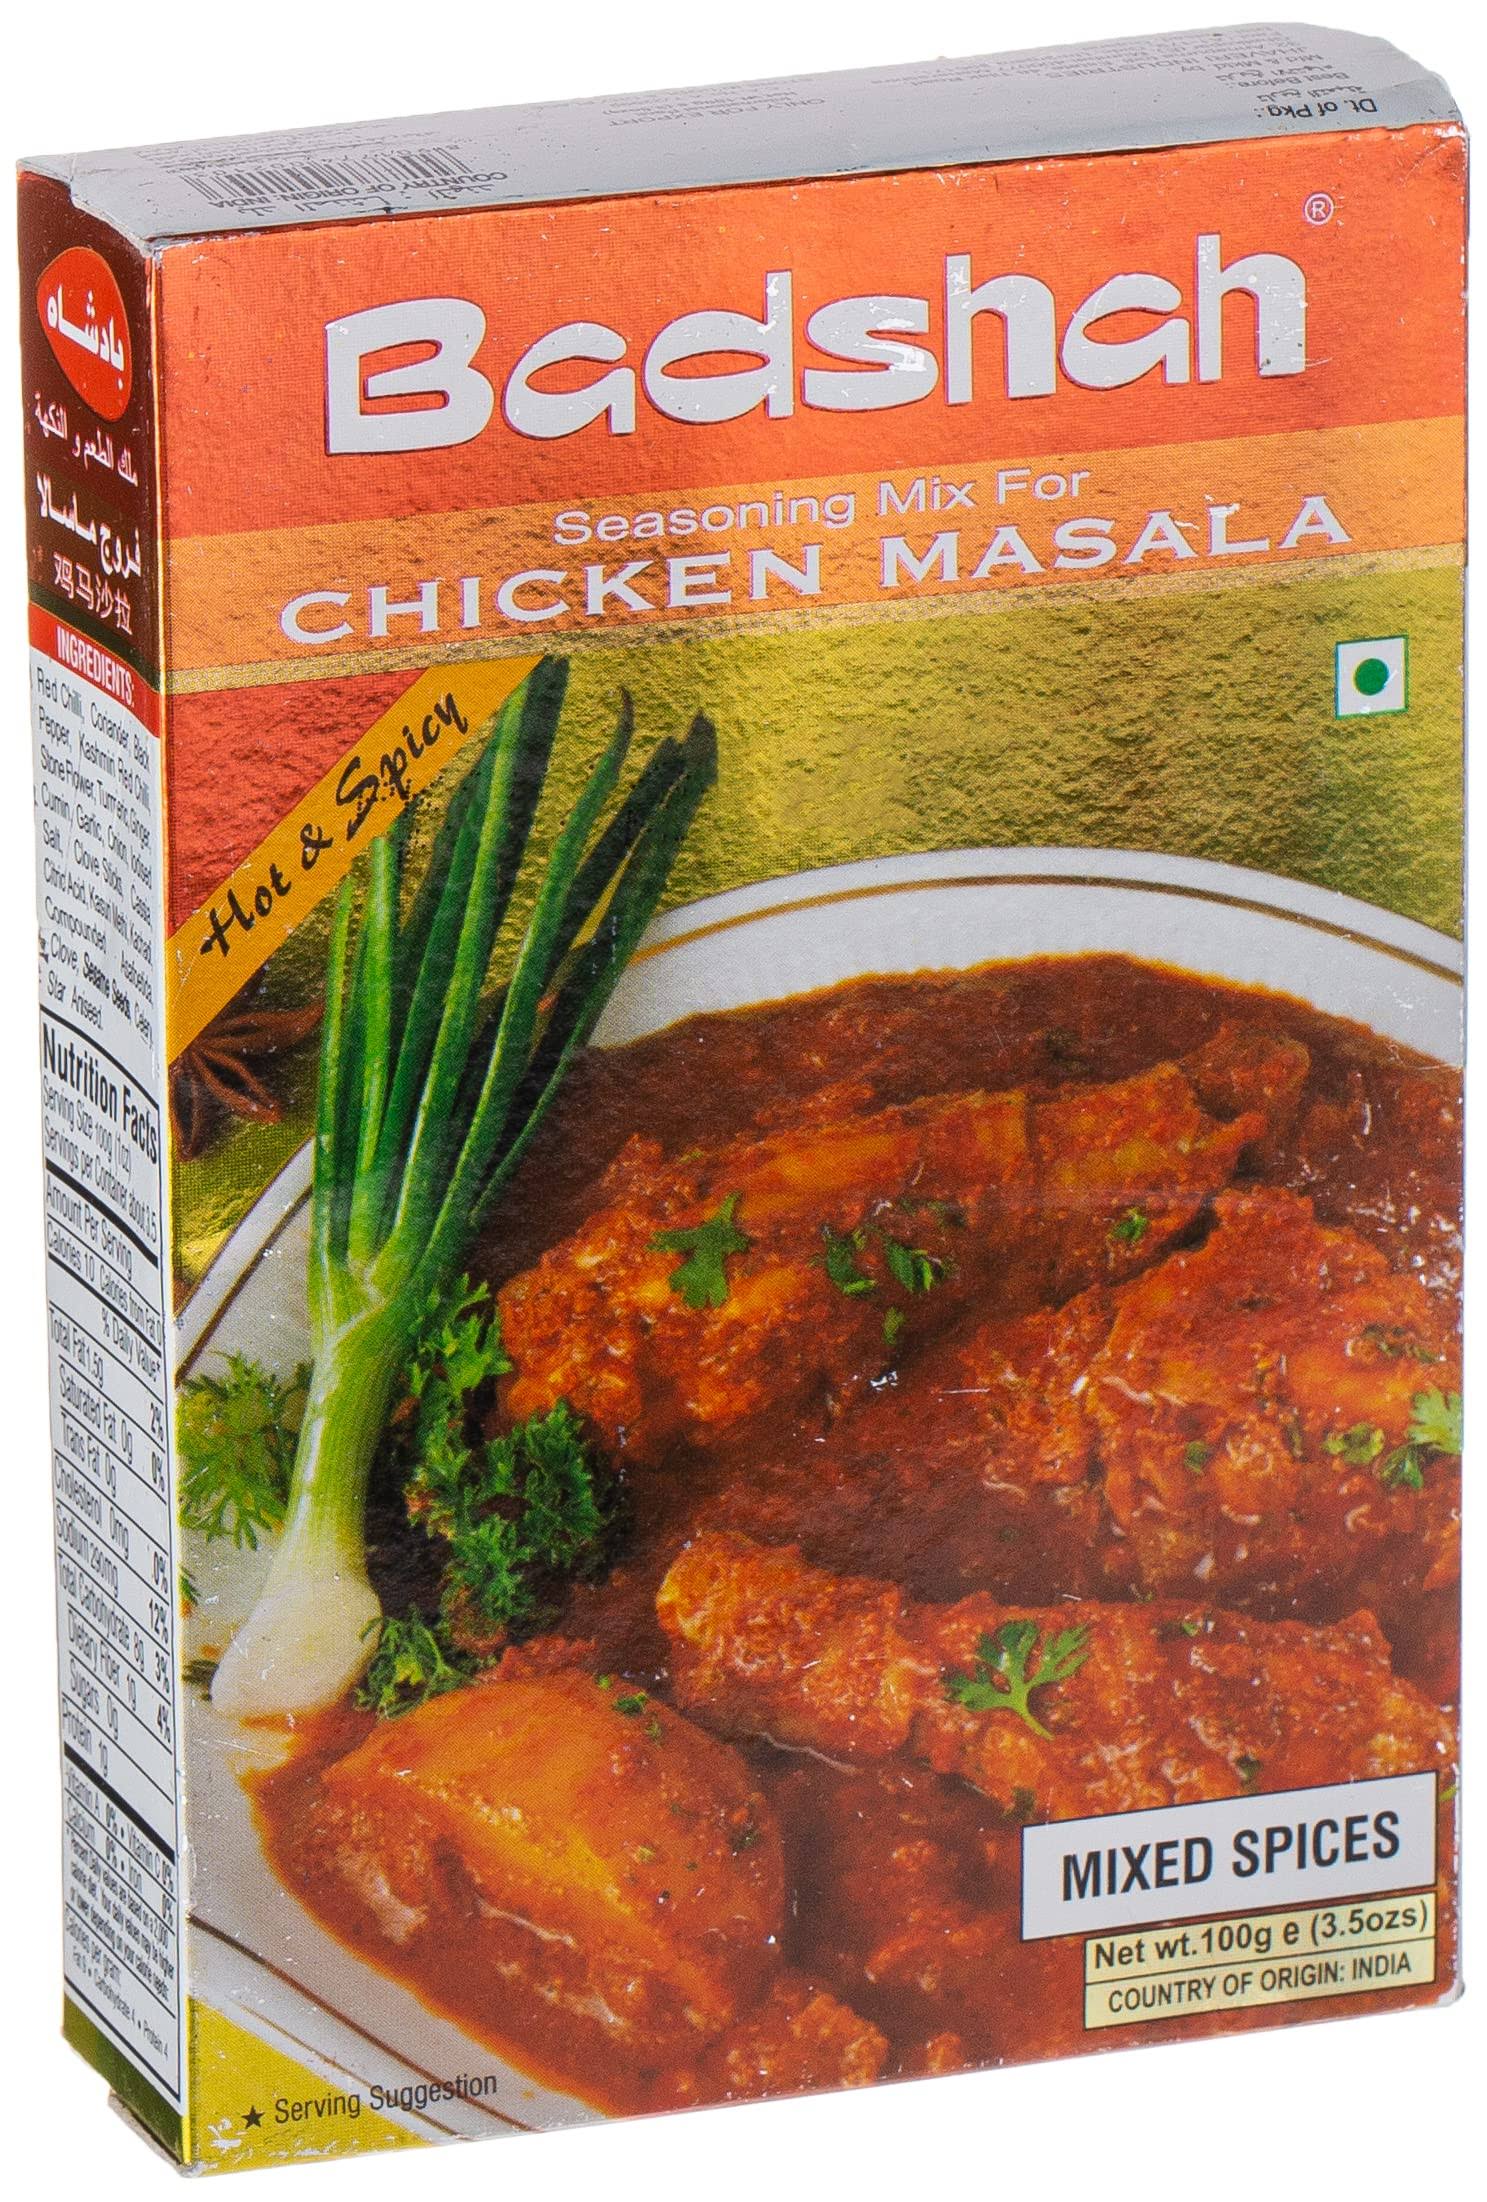 Badshah Seasoning Mix - Hot Chicken Masala